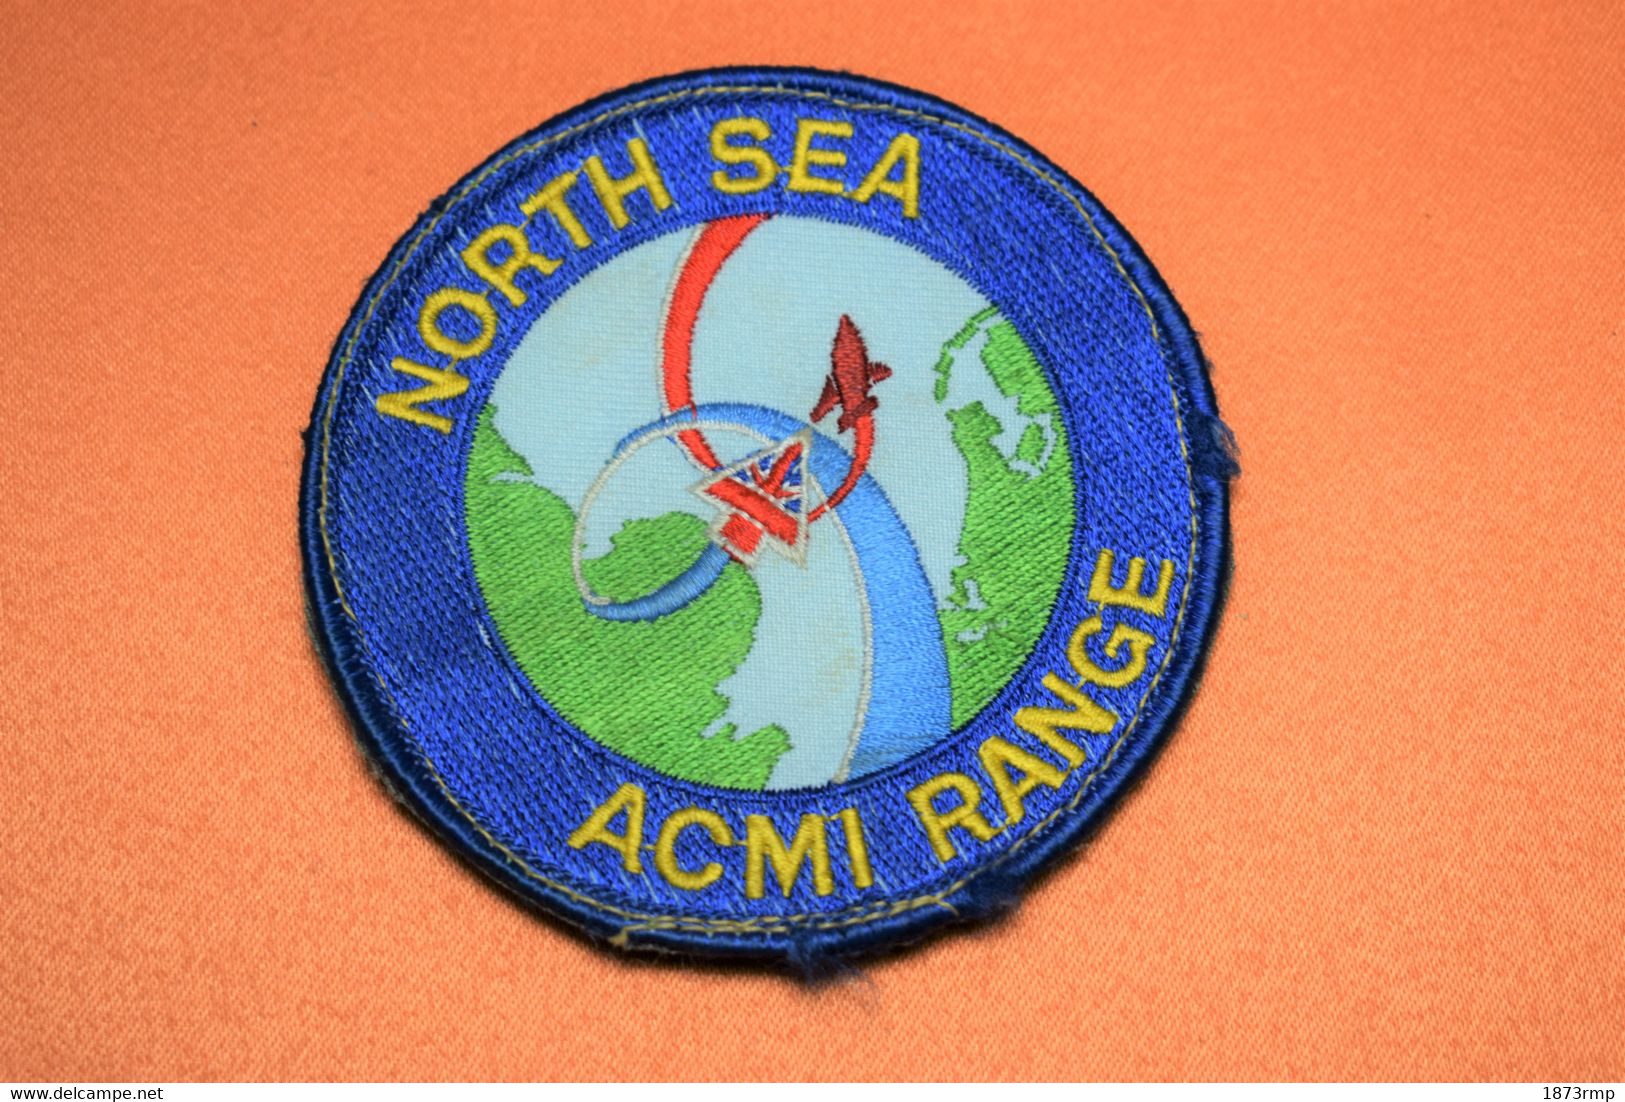 PATCH ACMI RANGE MER DU NORD , MANOEUVRE COMBAT AVIATION (1) - Aviation